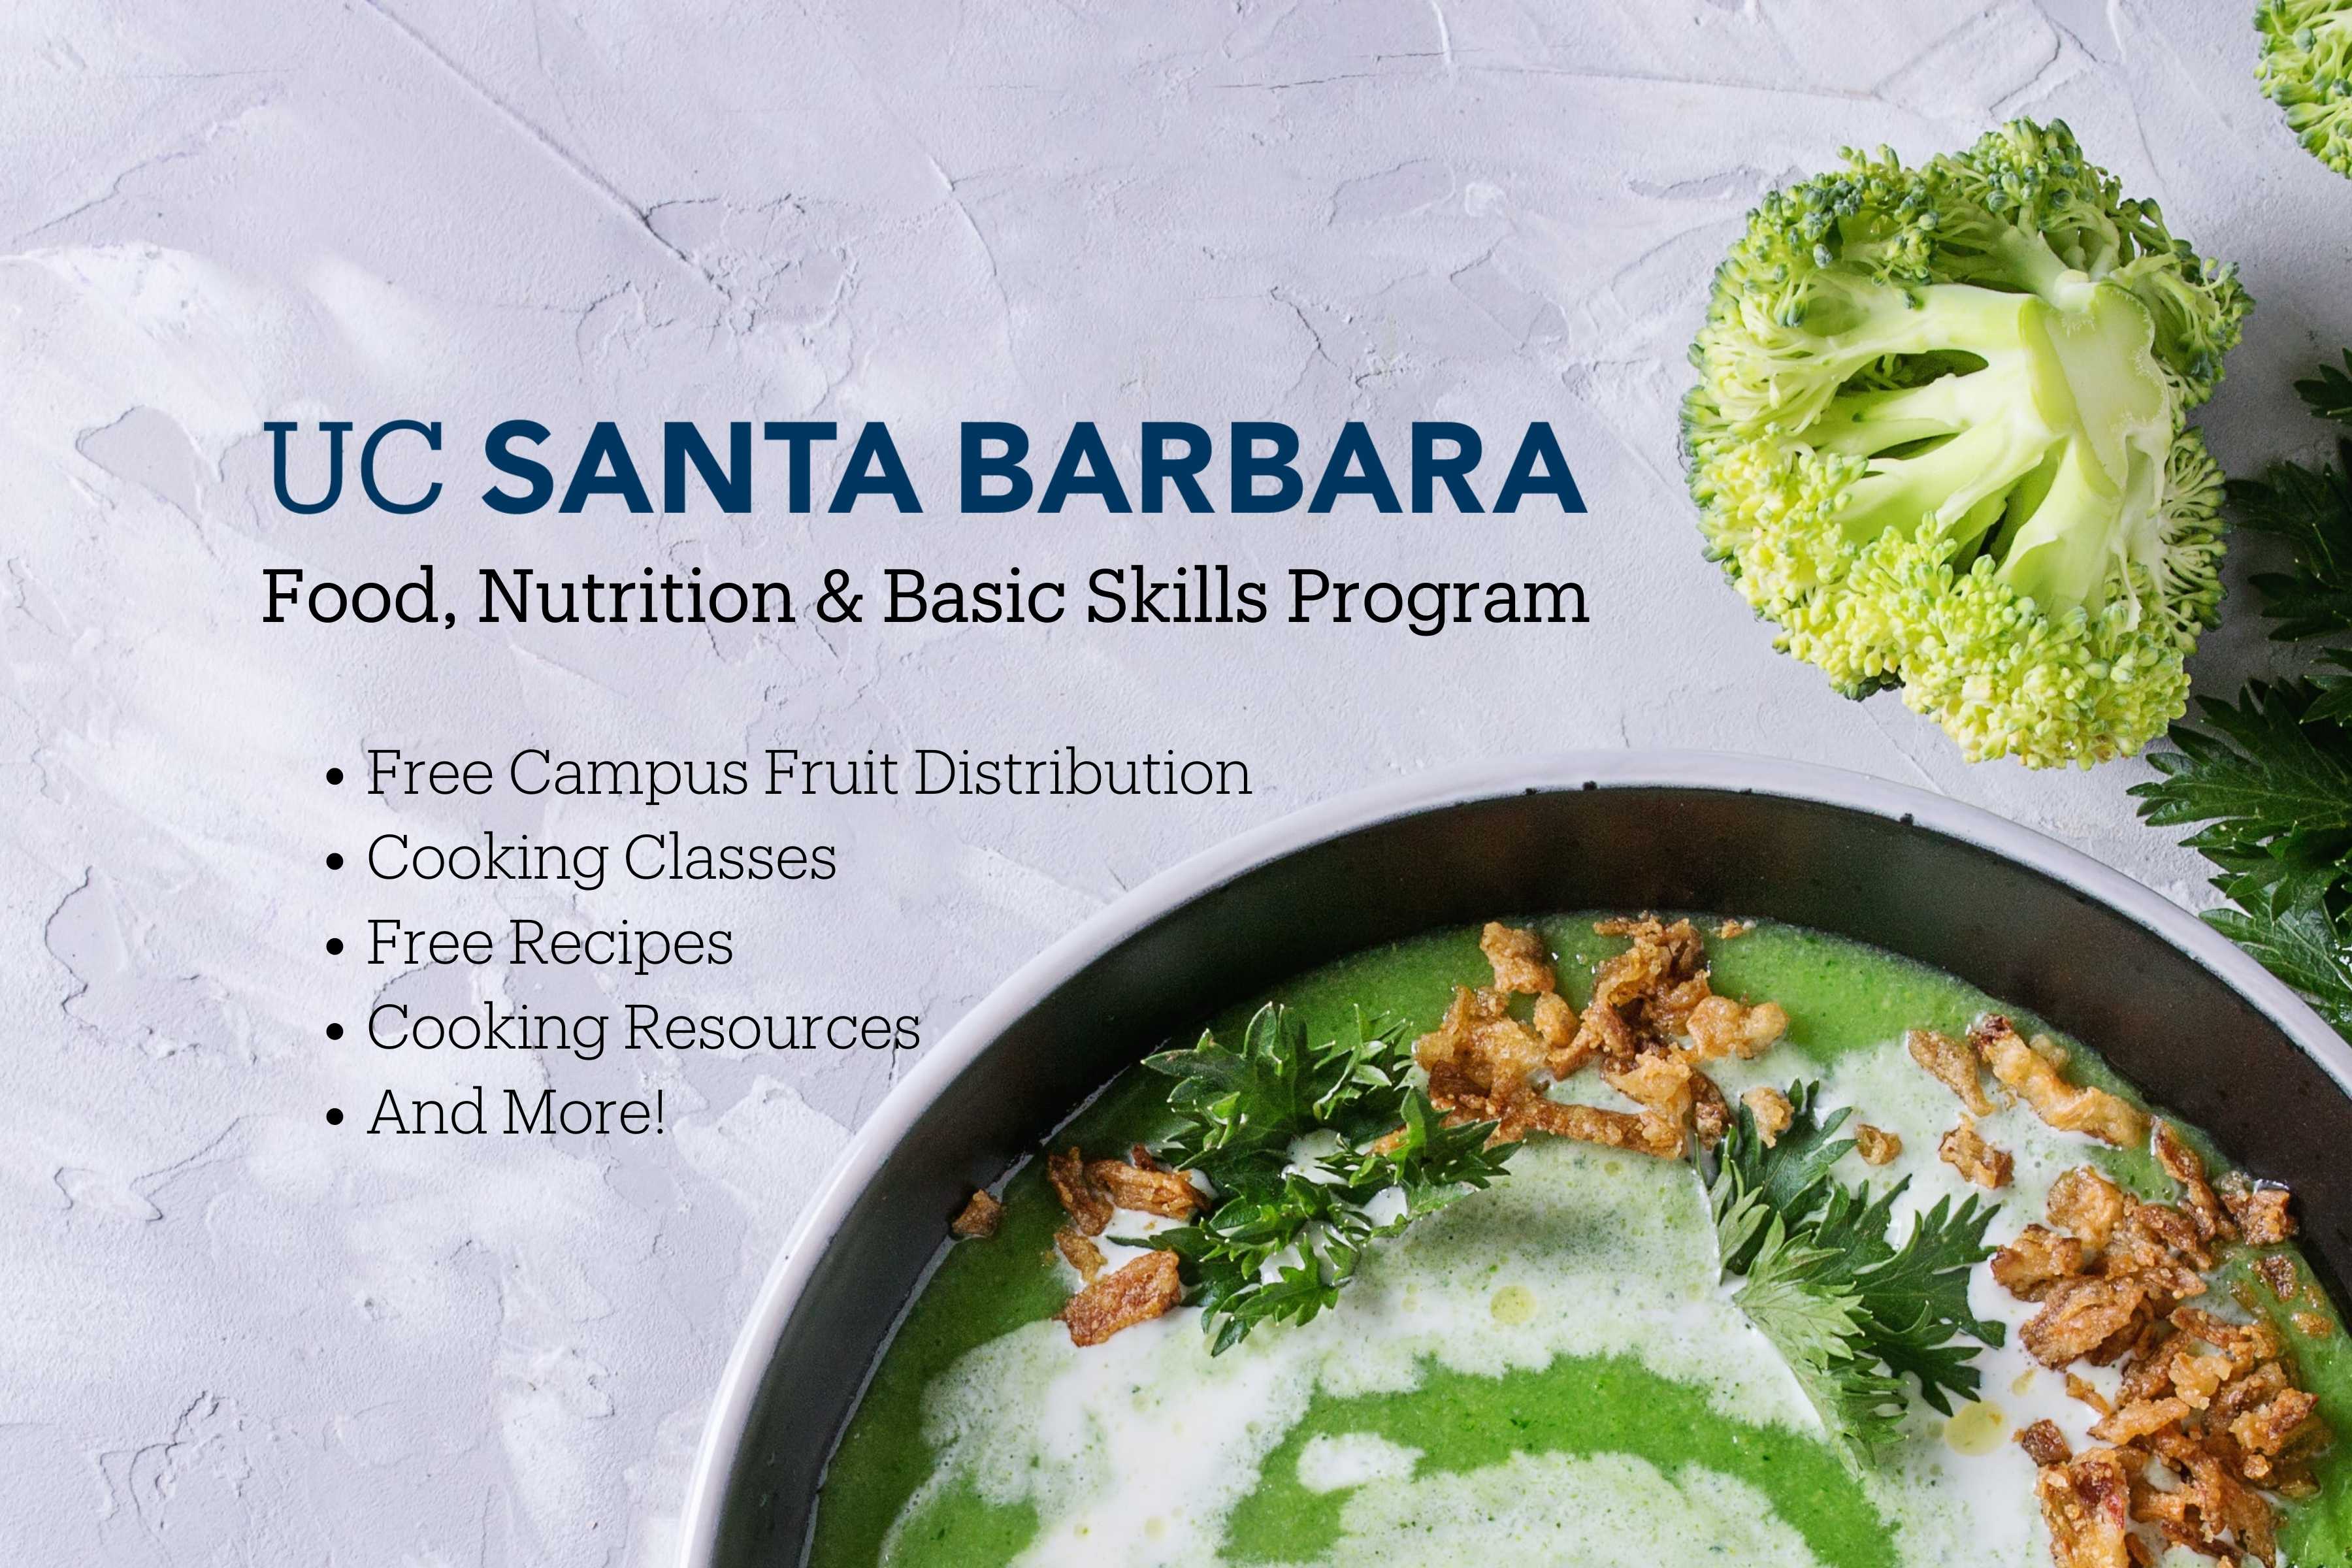 Food, Nutrition, & Basic Skills Program (1500 × 1200 px) (1).jpg